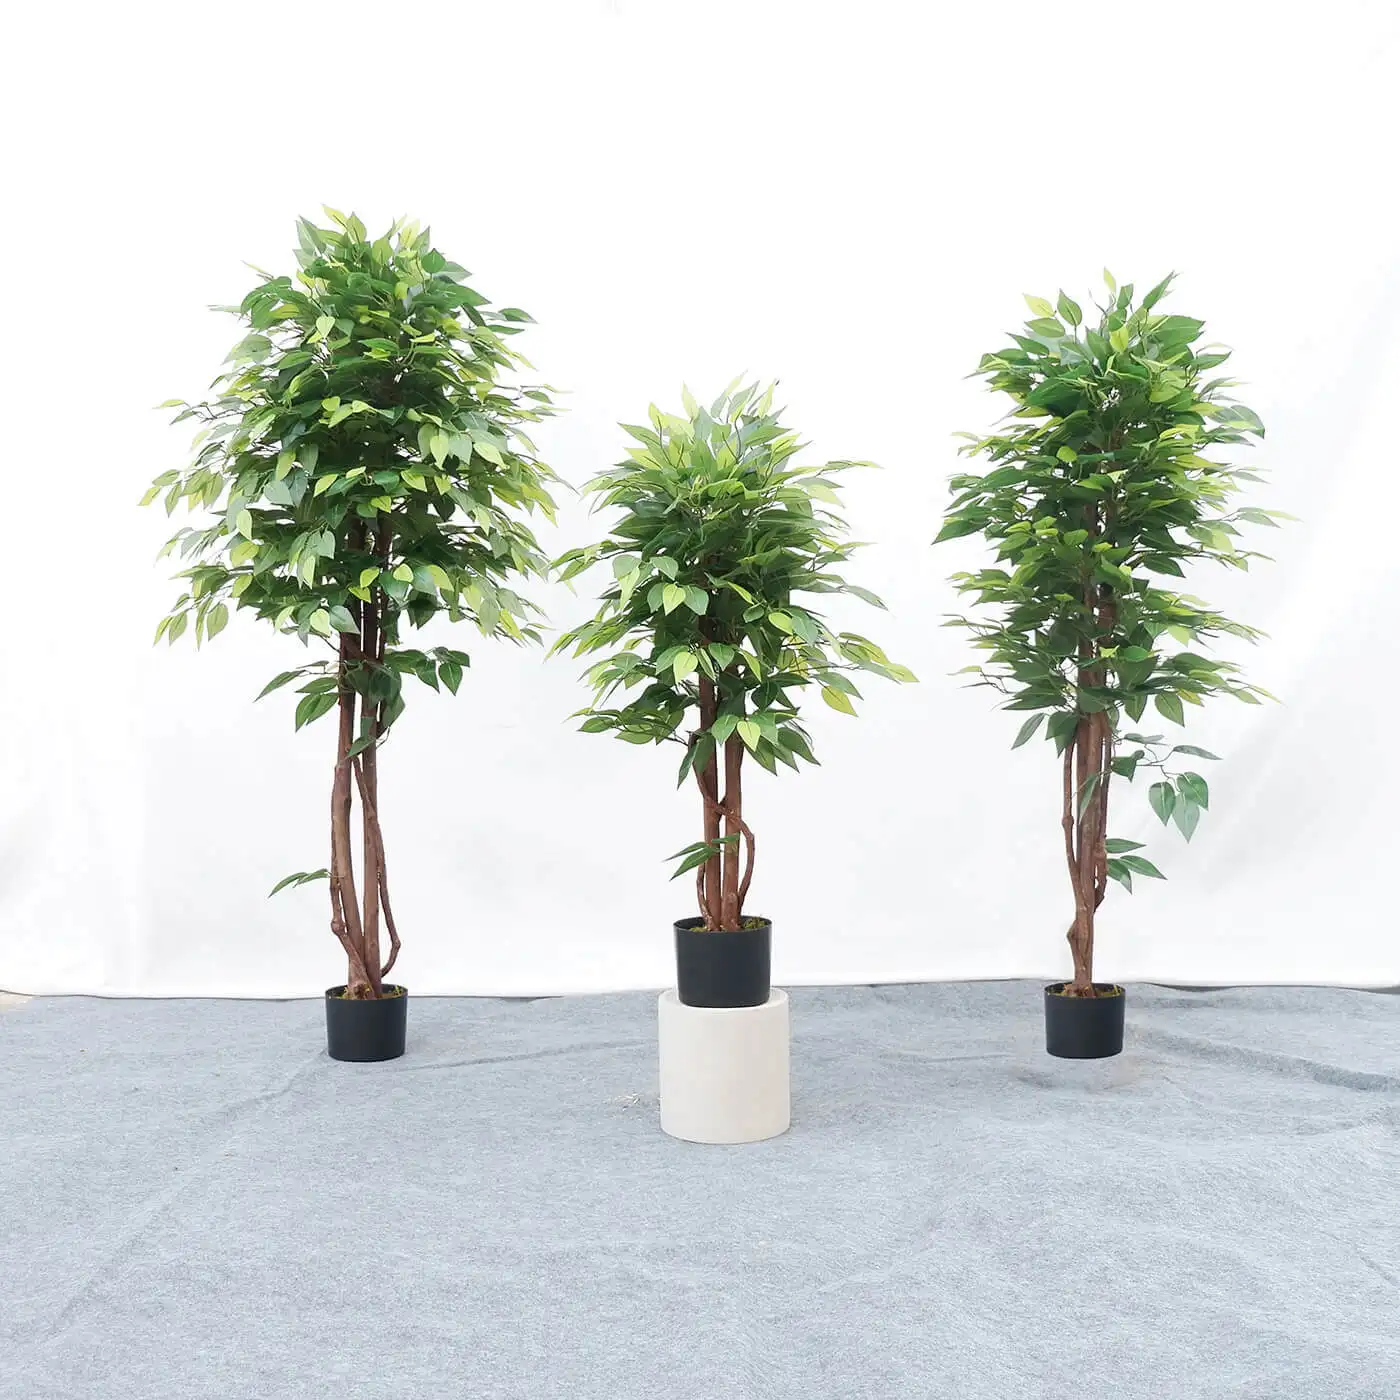 Artificial Plant Bonsai Green Plant Green Leaves Potted Bonsai Tree Decorative Ficus Tree Bonsai